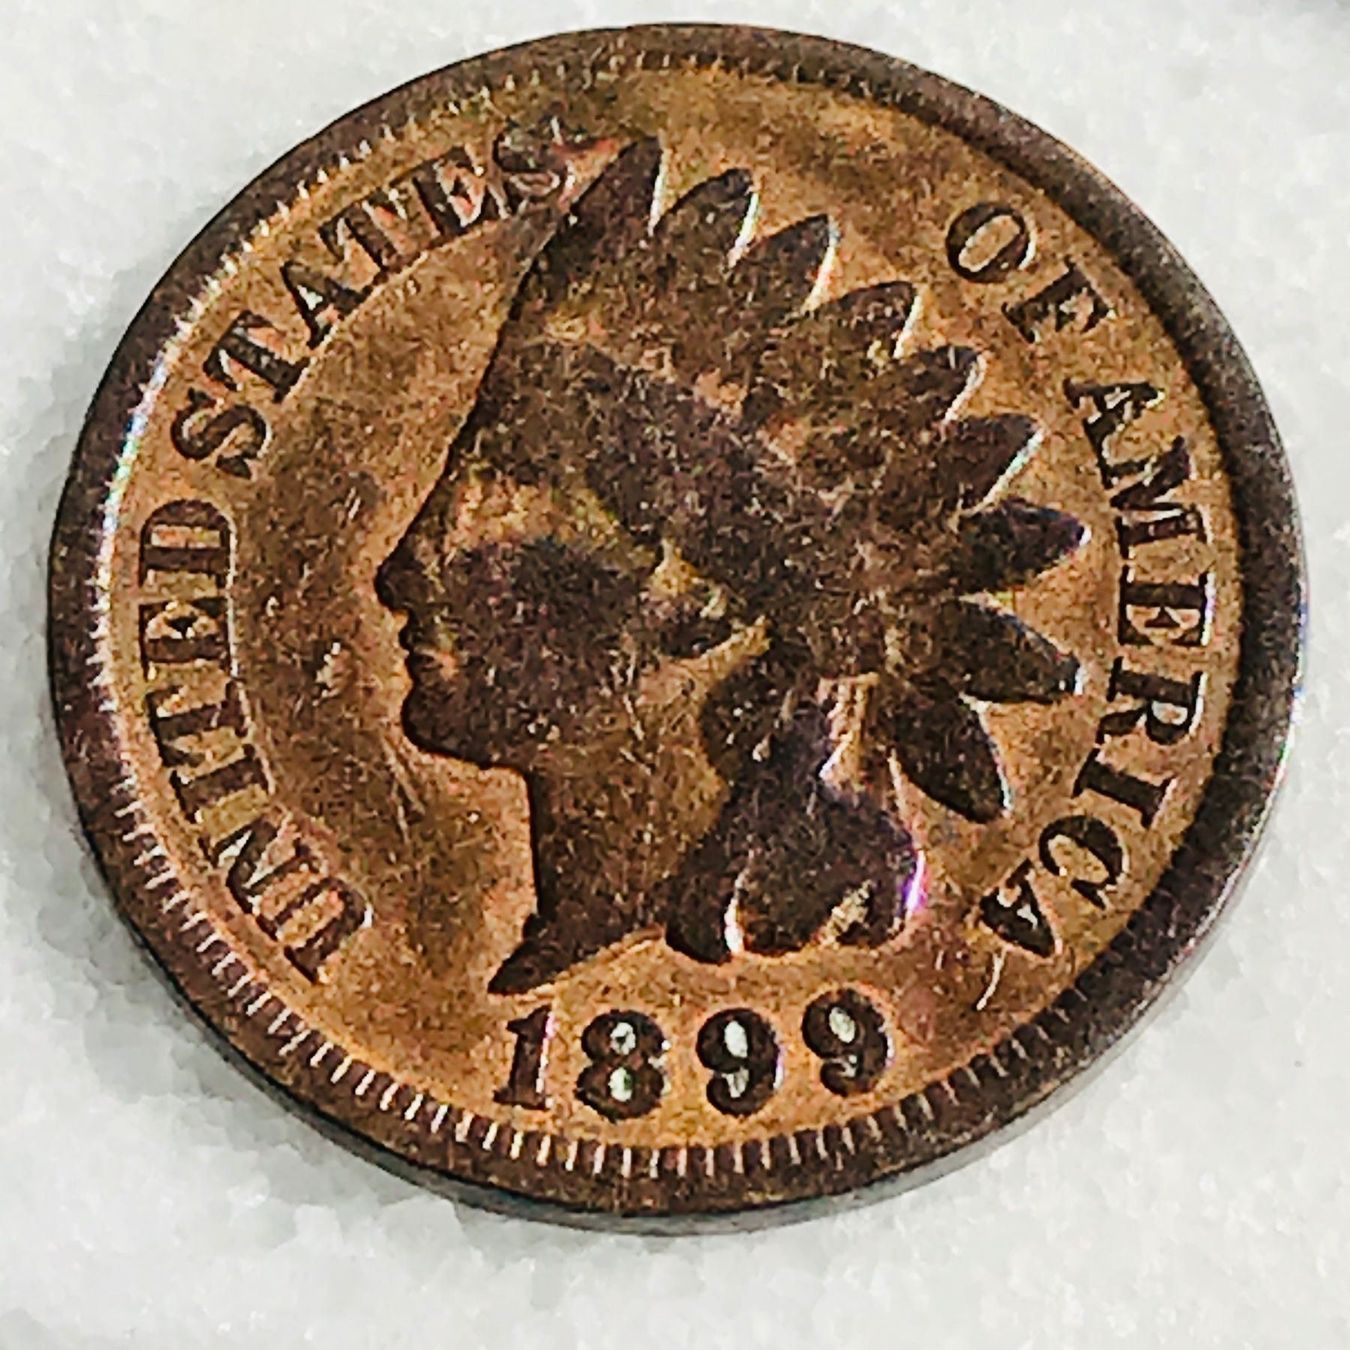 M nzen 1 Cent  1899 USA  Motiv  H uptling  kaufen auf Ricardo